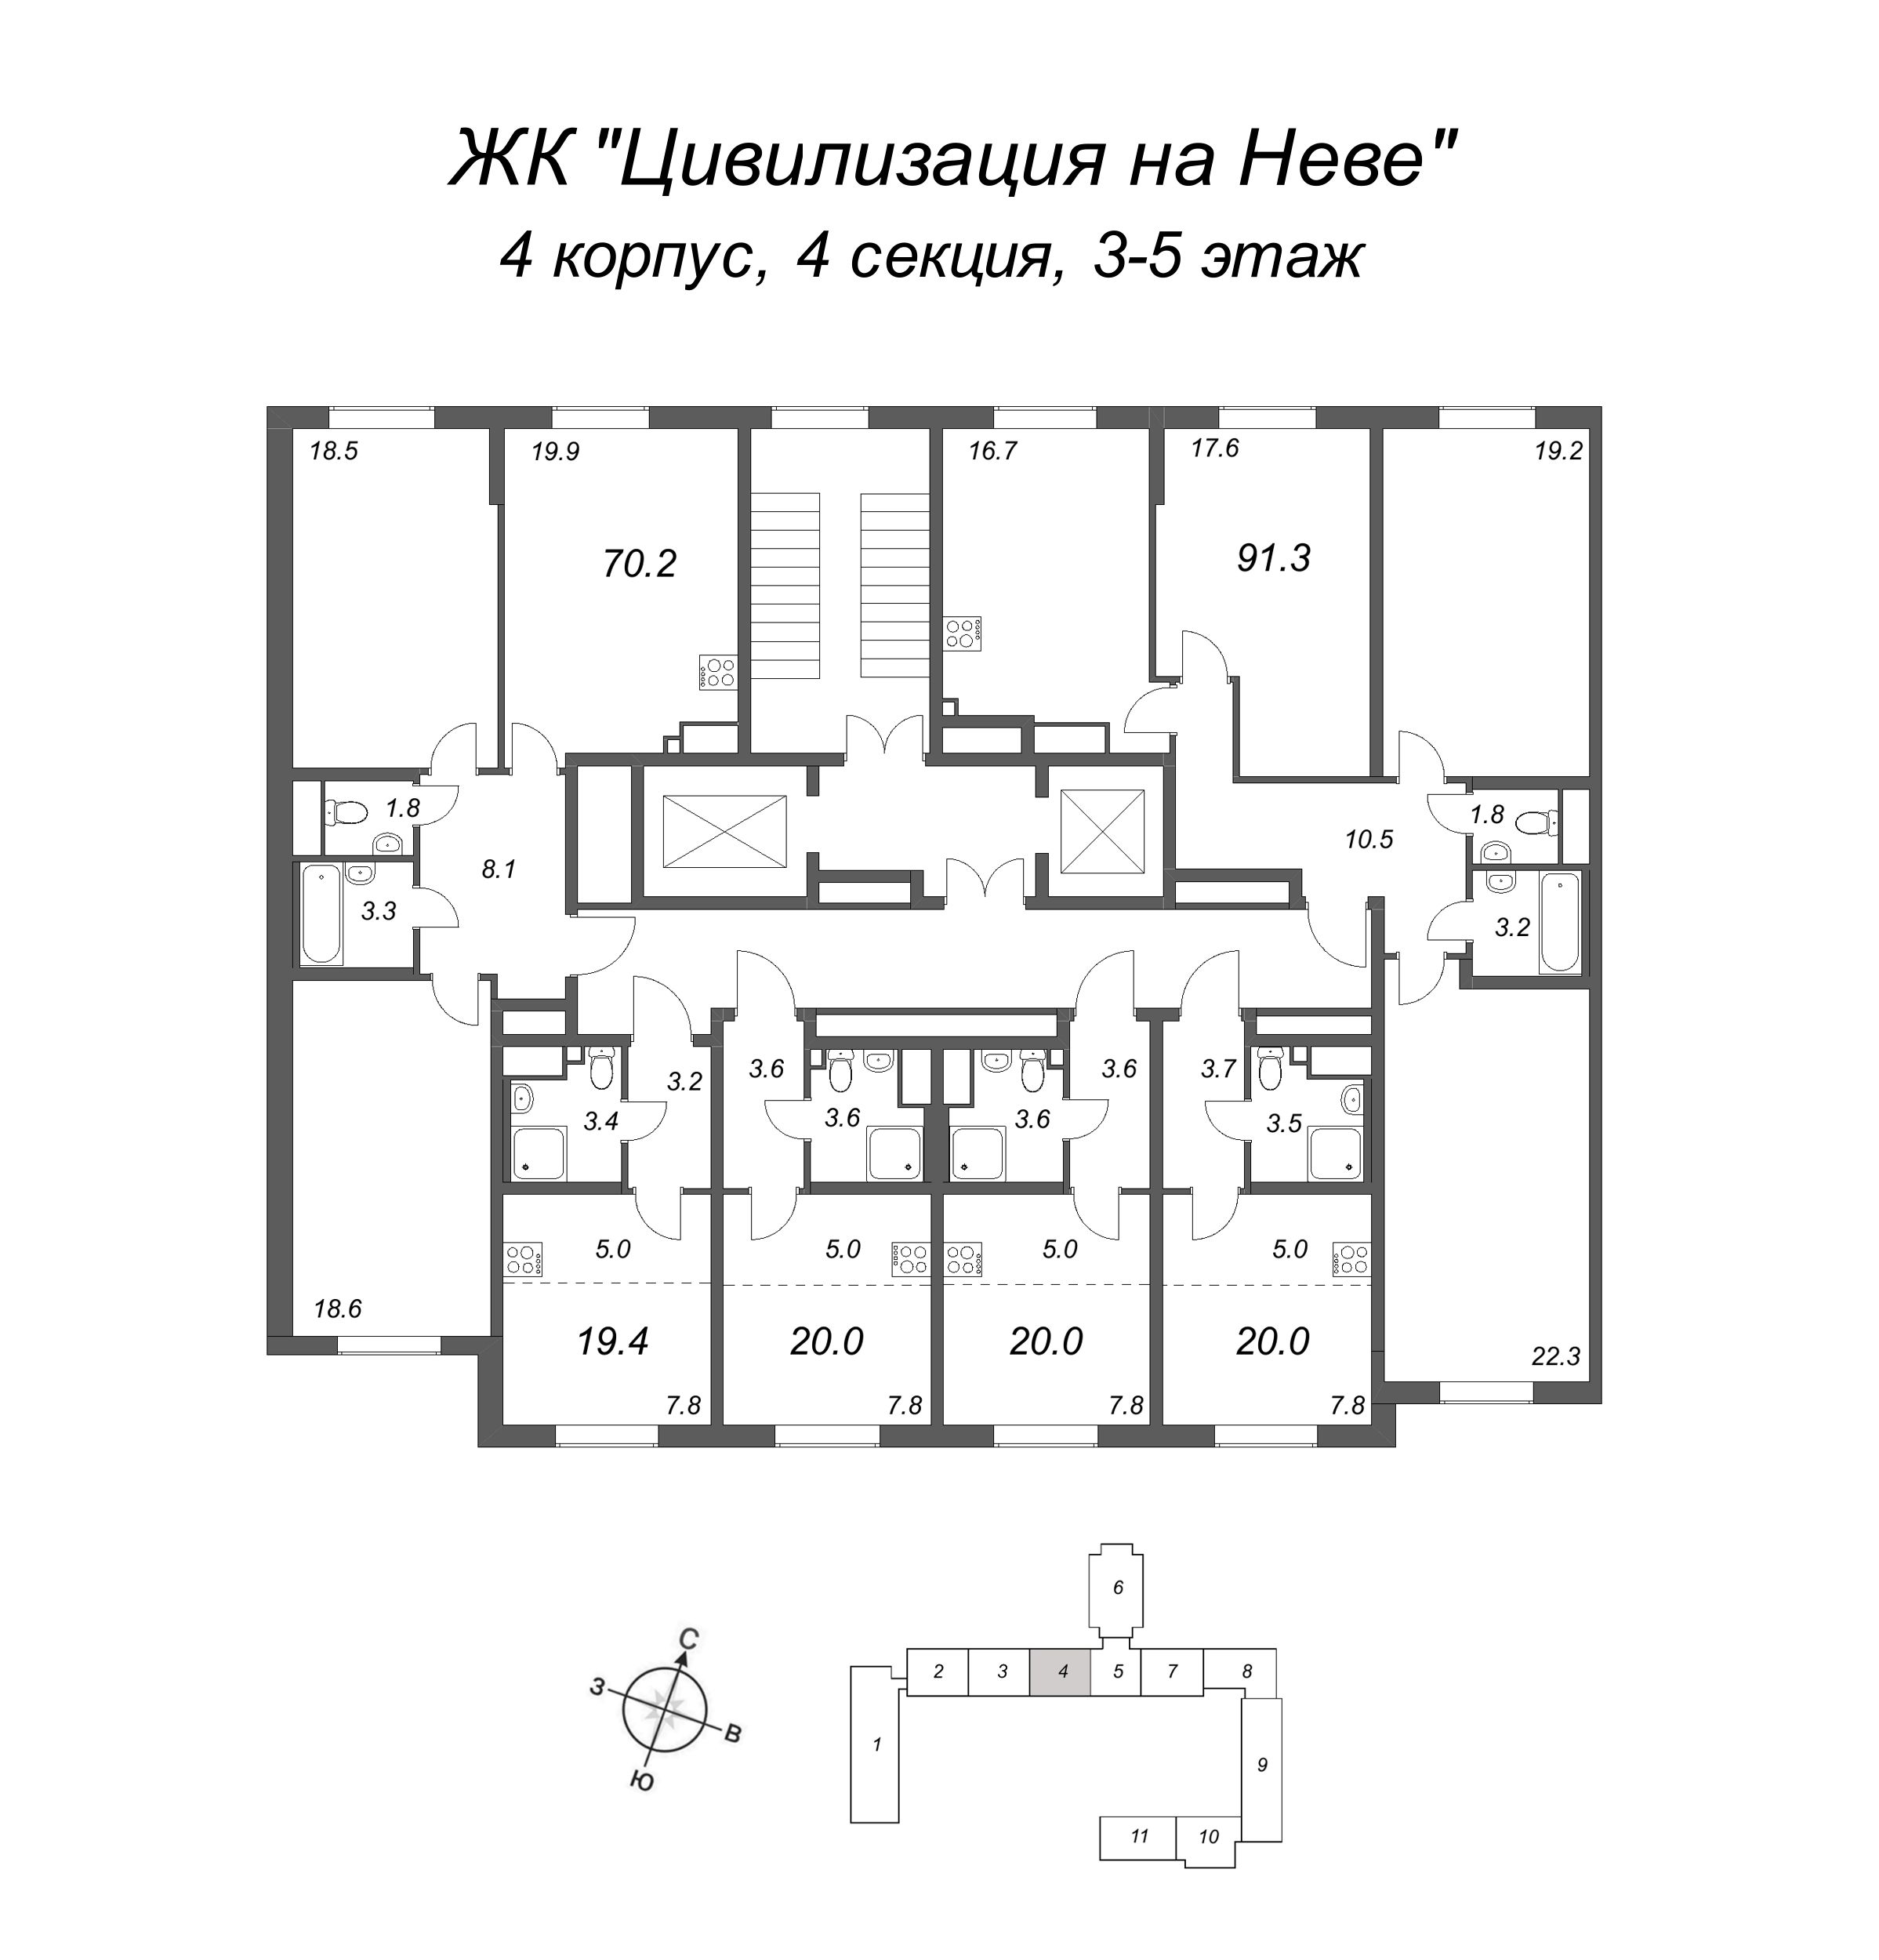 4-комнатная (Евро) квартира, 91.3 м² - планировка этажа